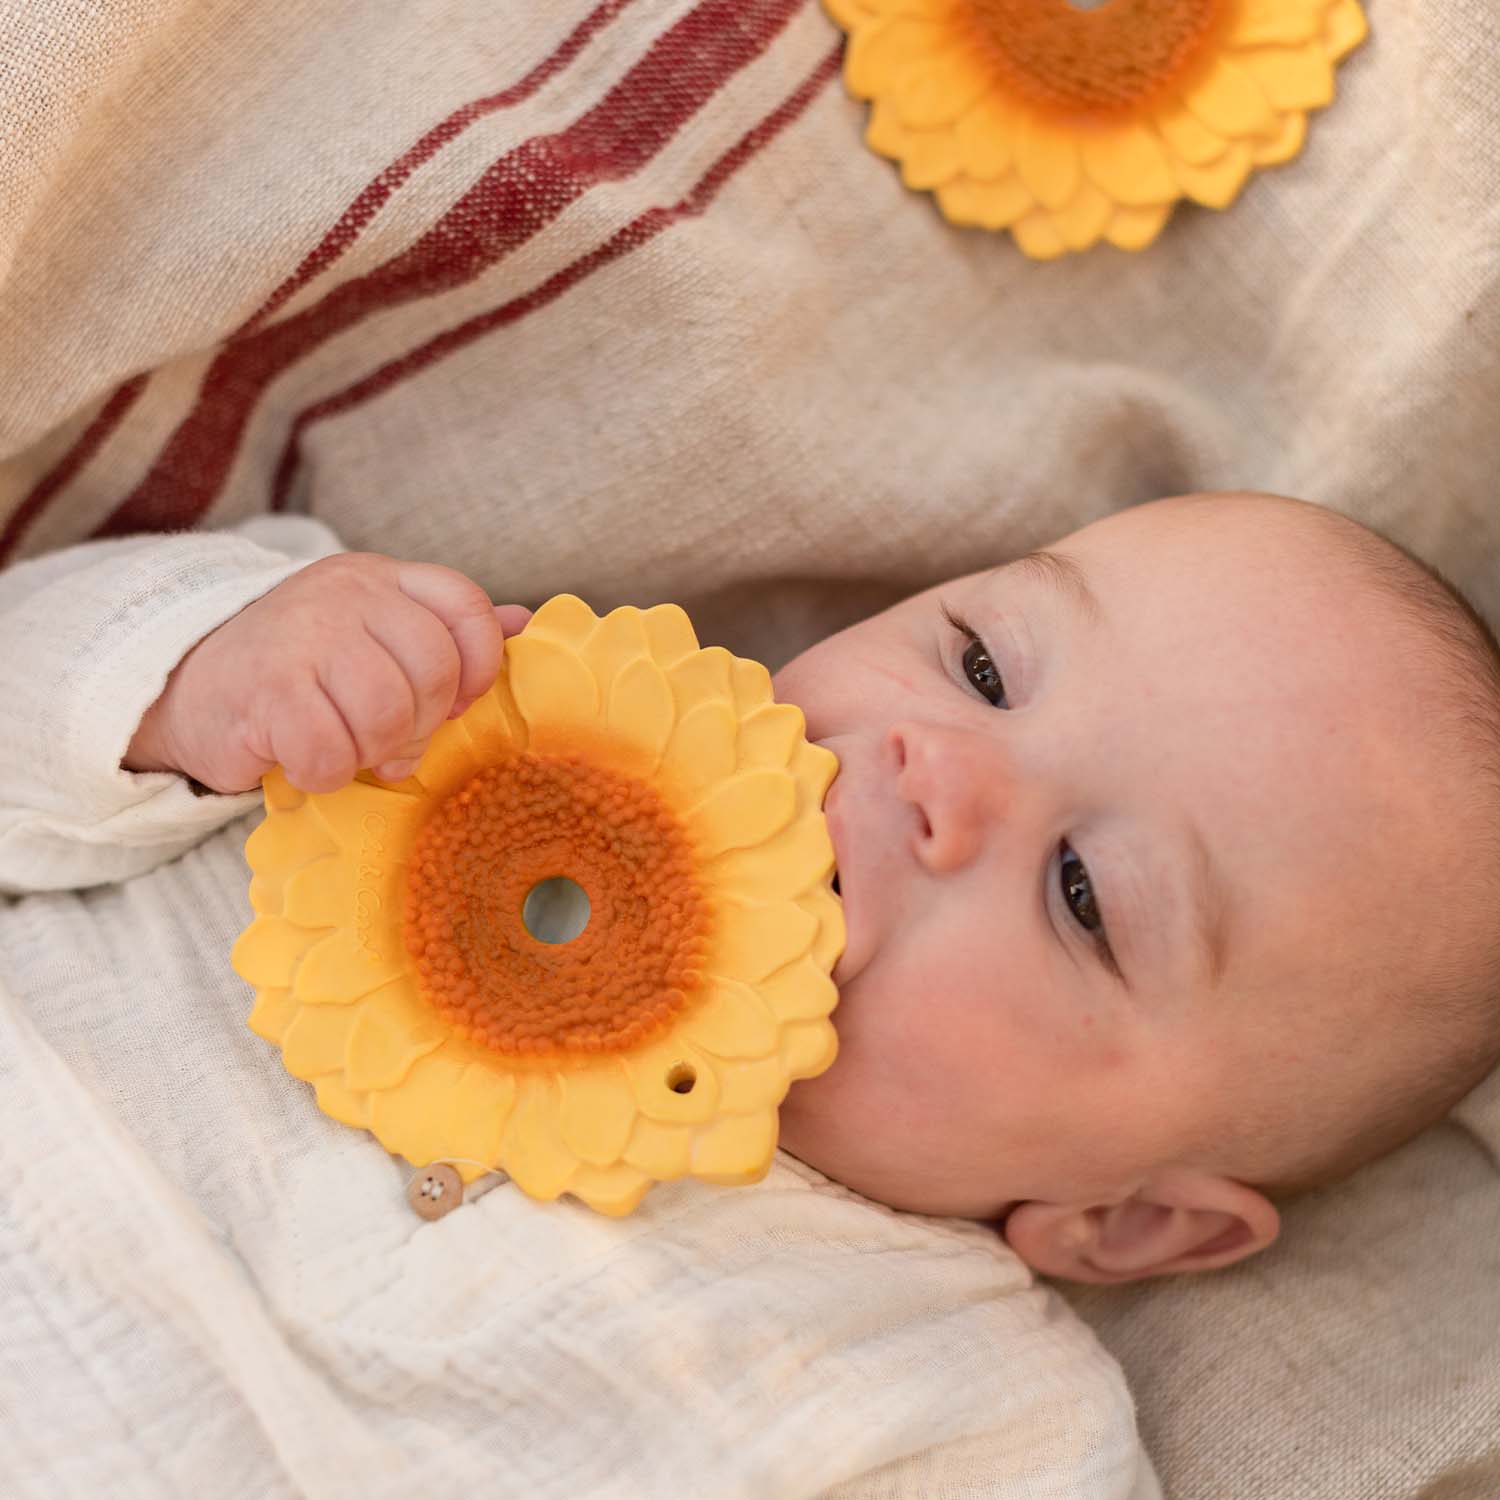 Sun the Sunflower Baby Teether - Oli&Carol